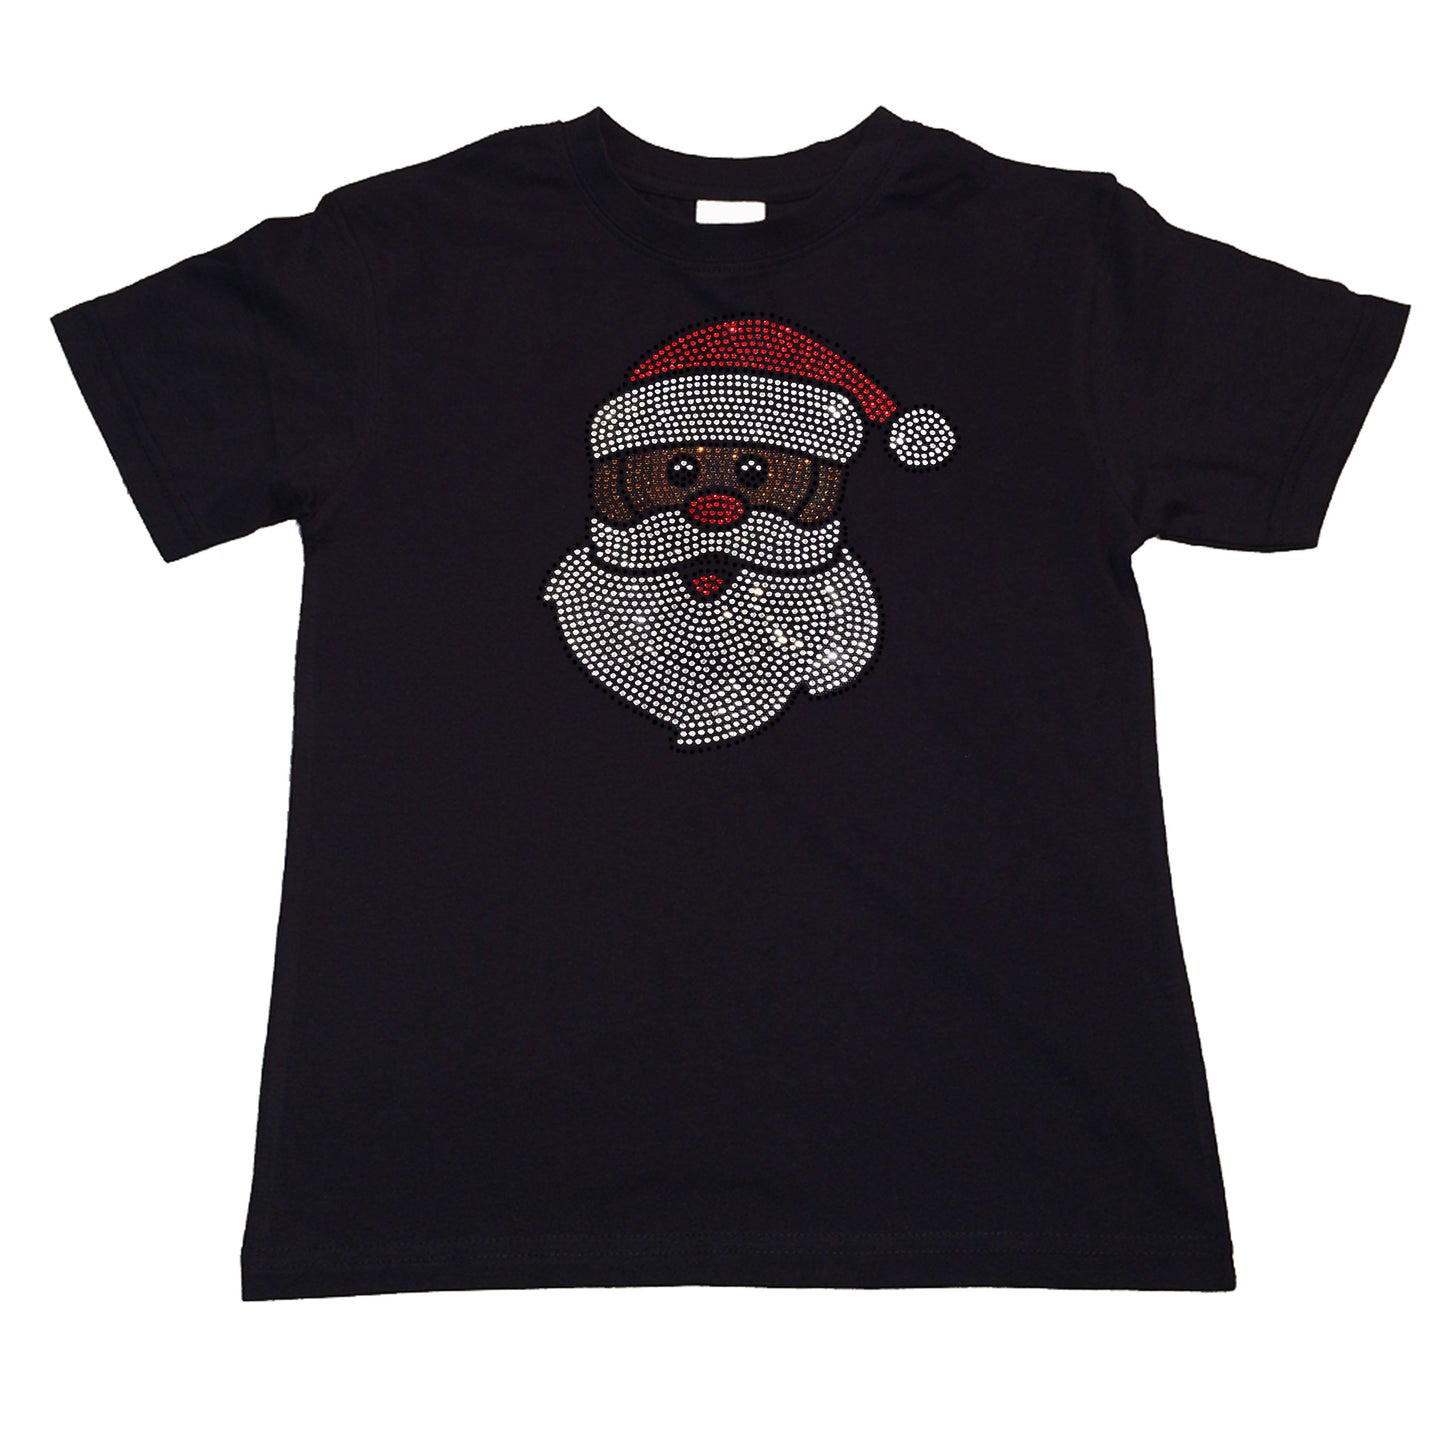 Girls Rhinestone T-Shirt " African American Santa Claus in Rhinestone " Kids Size 3 to 14 Available